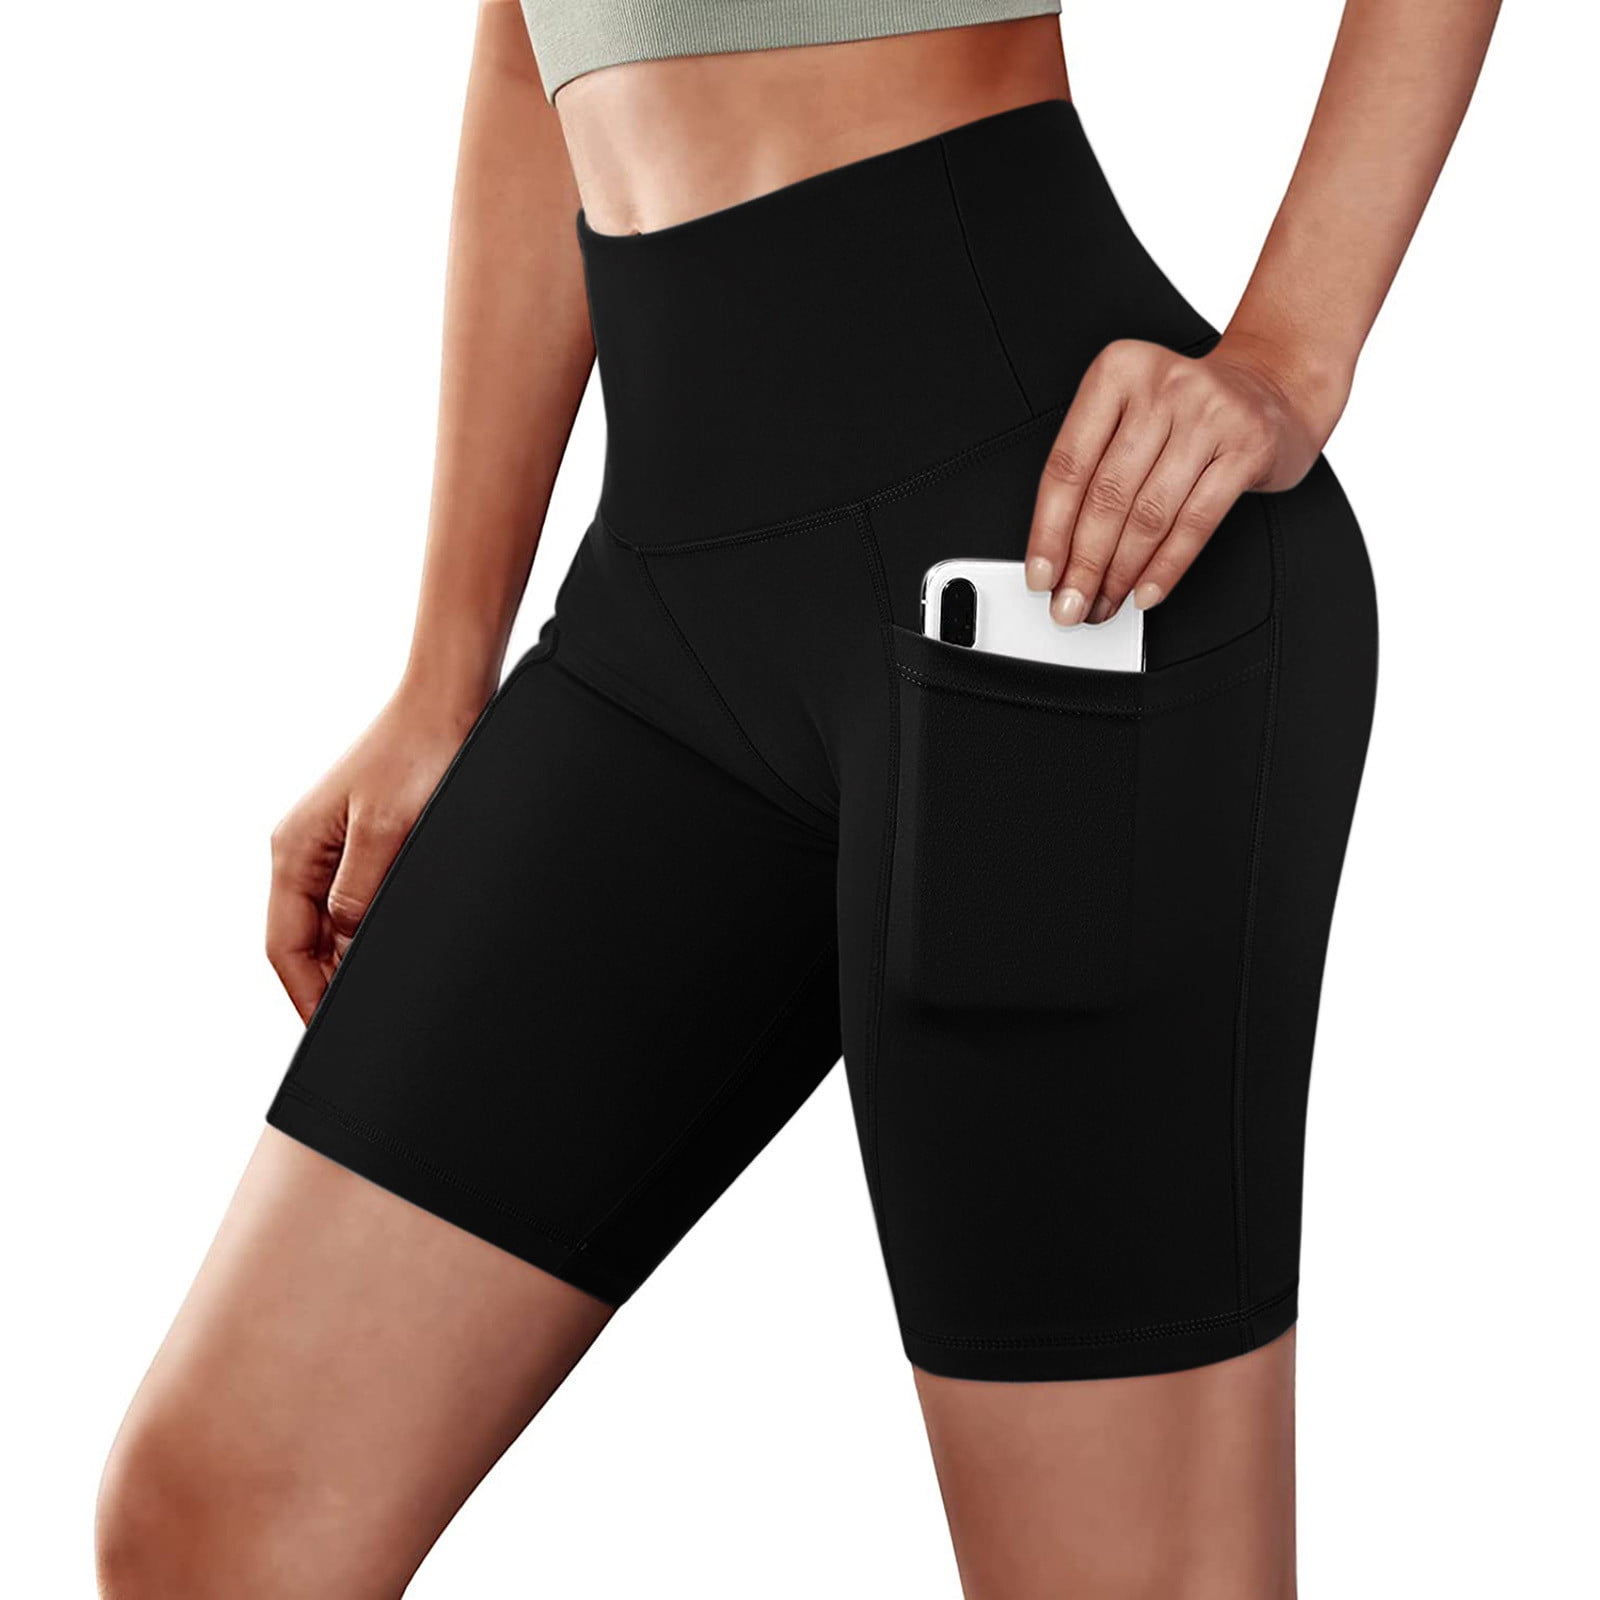 Jmntiy Women Basic Slip Bike Shorts Compression Workout Leggings Yoga Shorts Pants Clearance sale